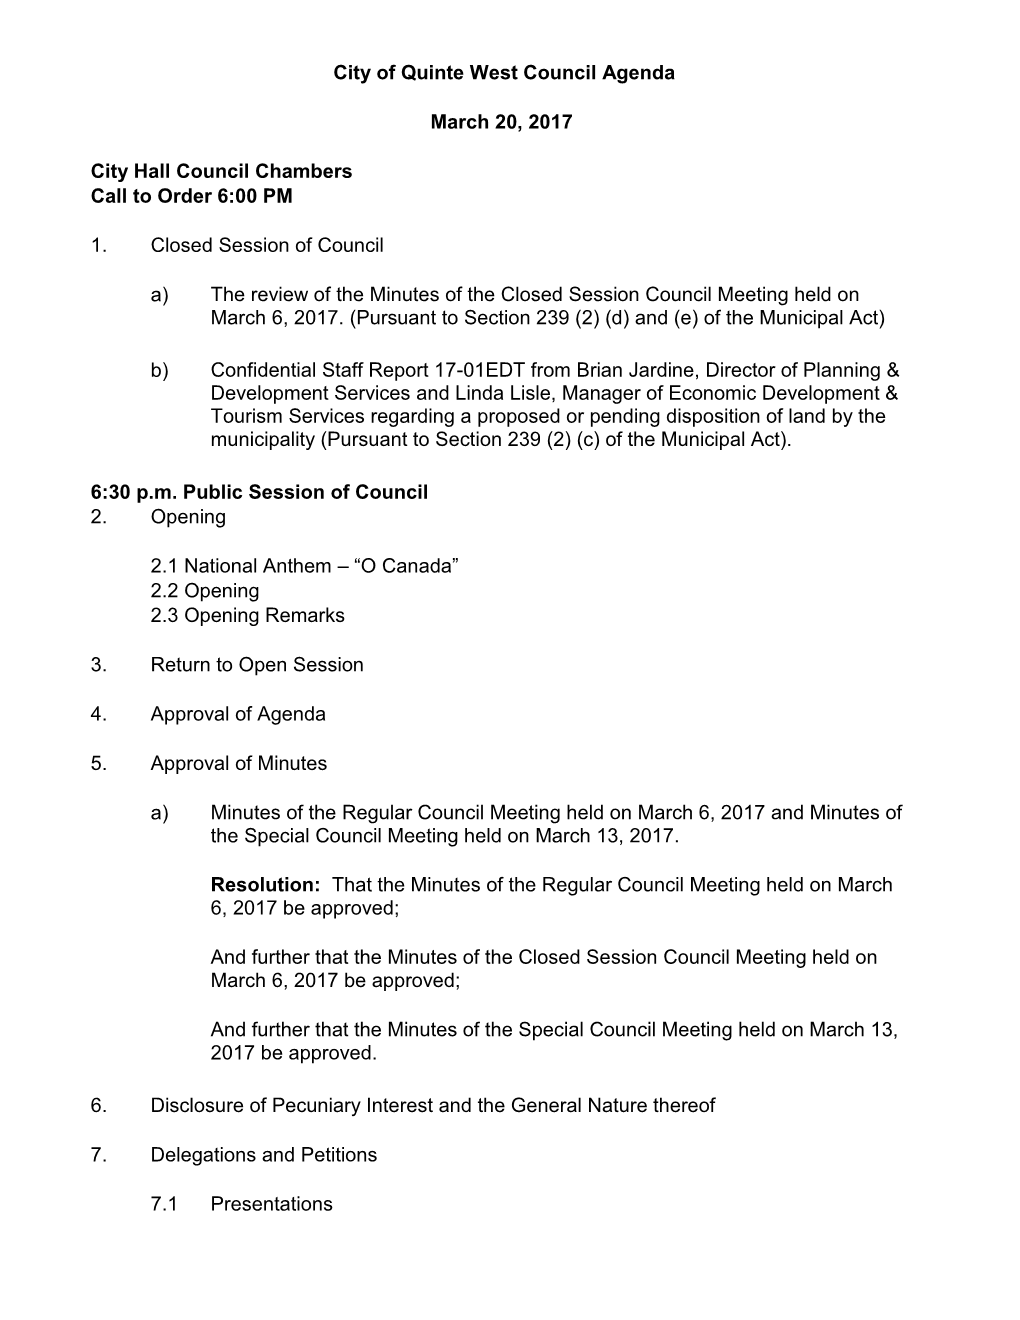 City of Quinte West Council Agenda March 20, 2017 City Hall Council